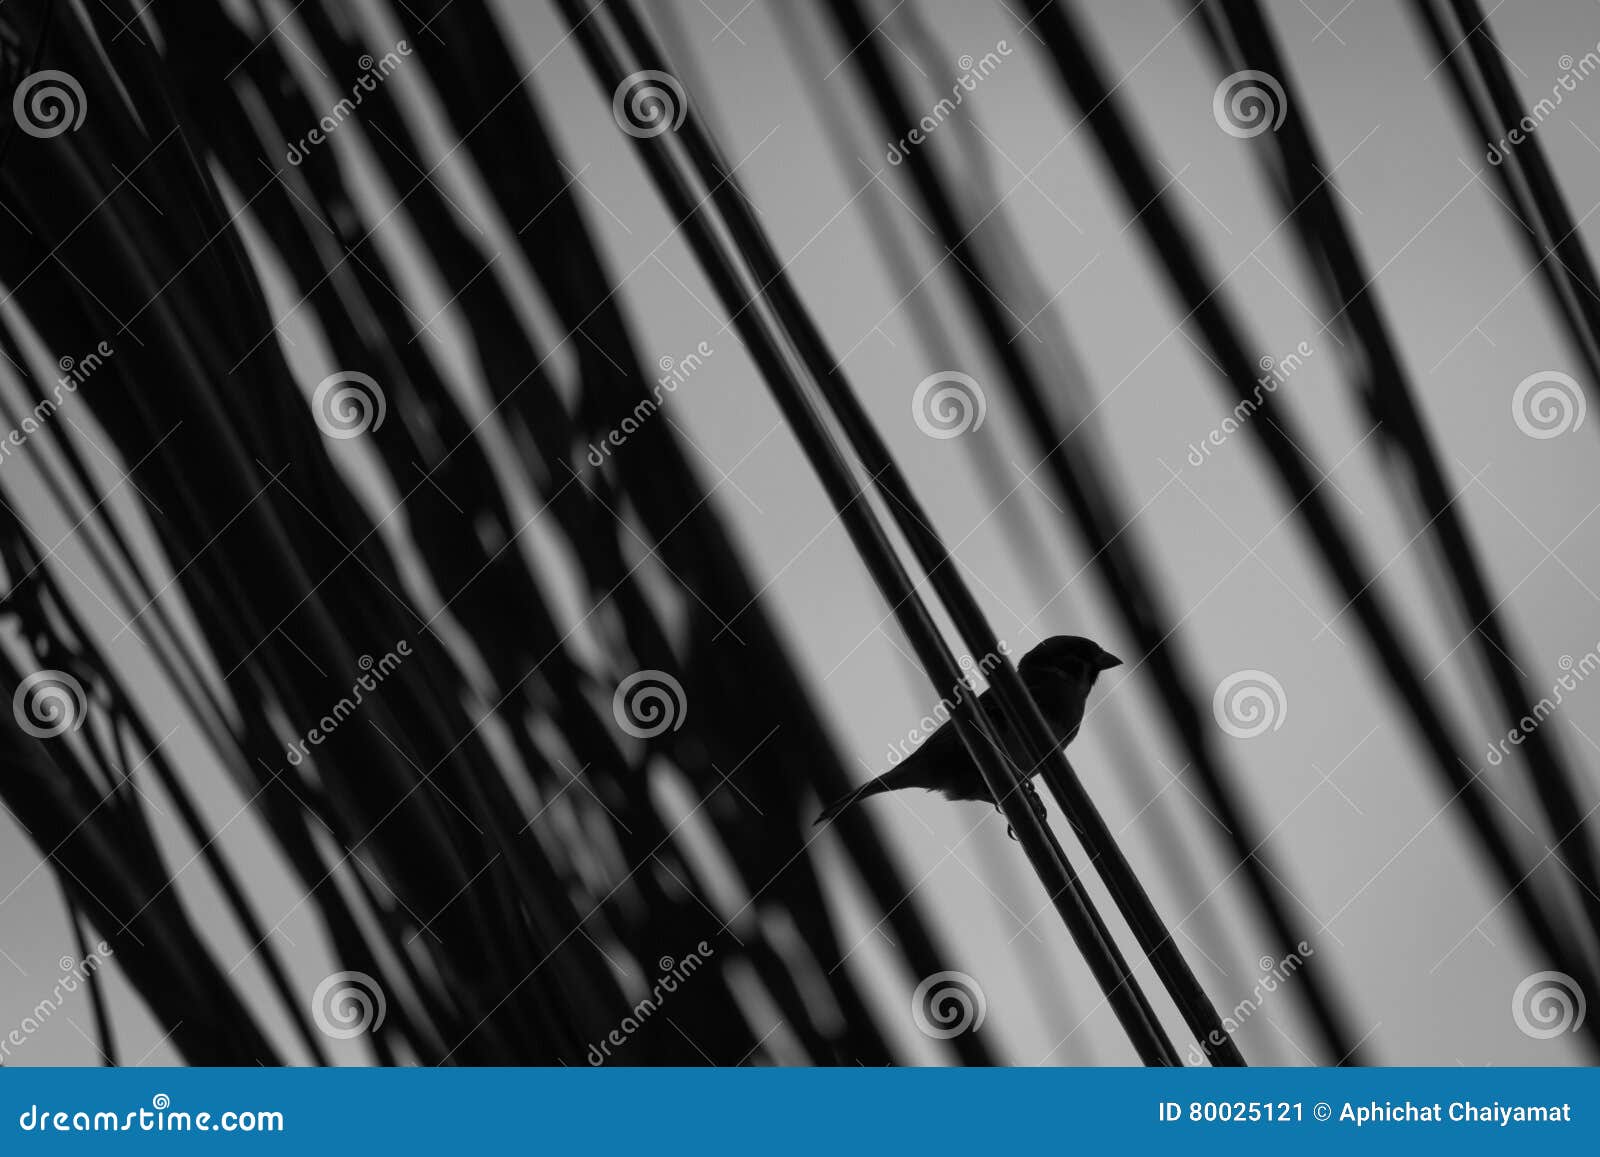 sparrow siluate